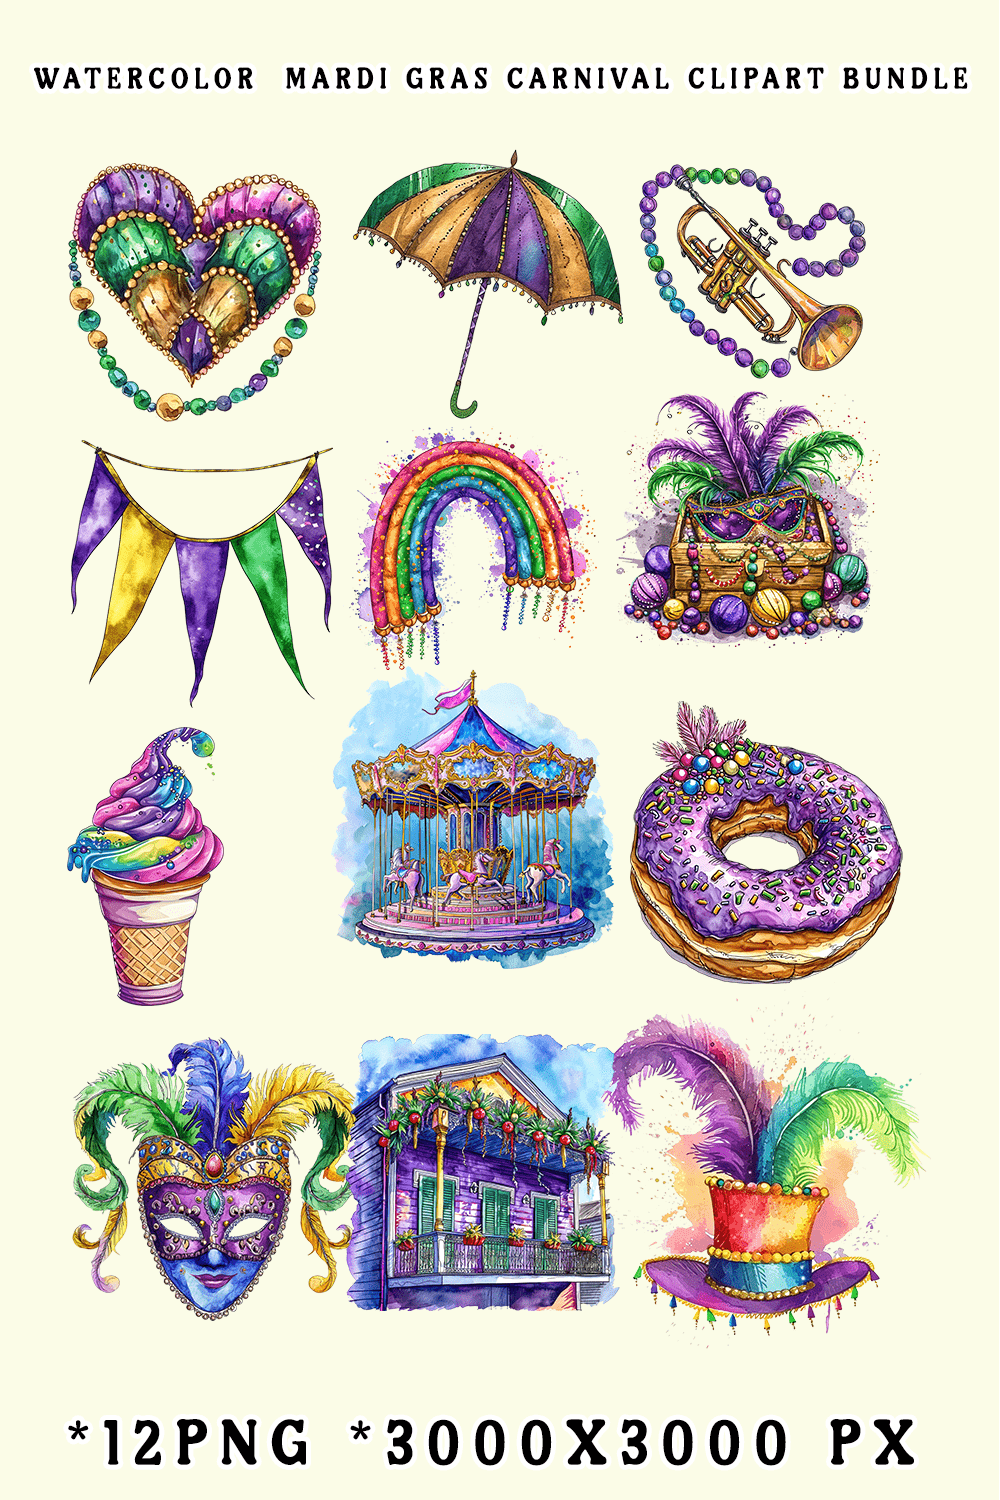 Watercolor Mardi Gras Carnival Clipart Bundle pinterest preview image.